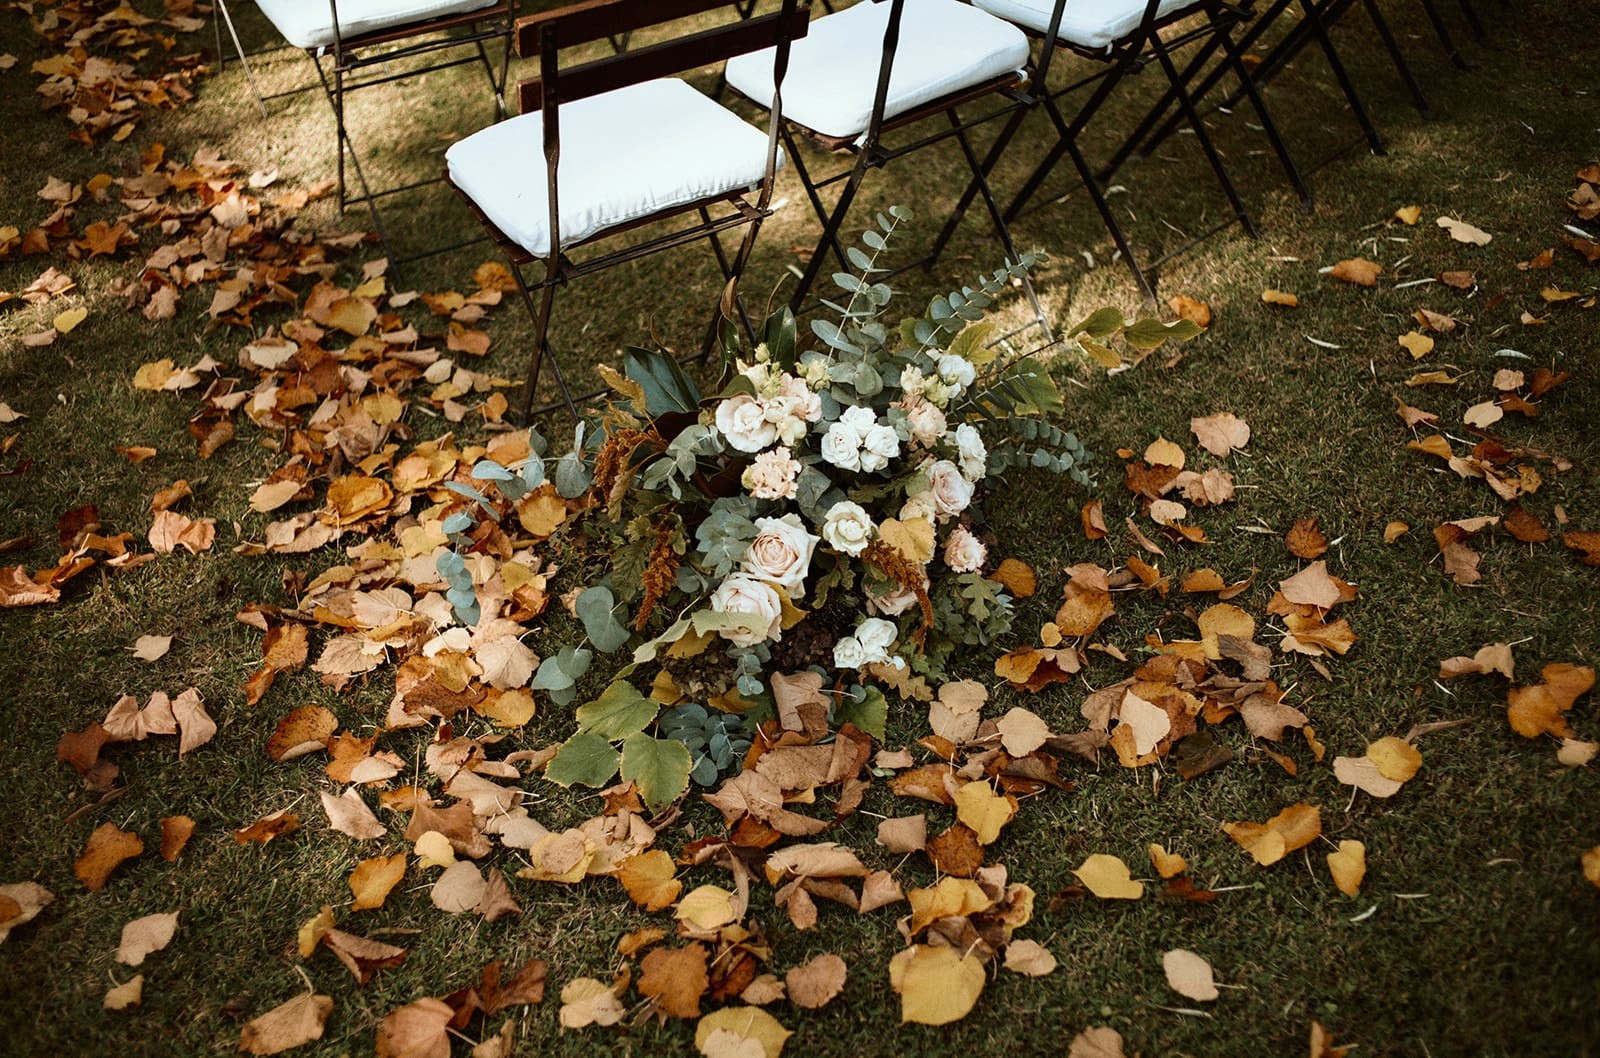 Wedding Ceremony - Autumn Wedding Ceremony at Villa Cetinale, Siena,  Tuscany